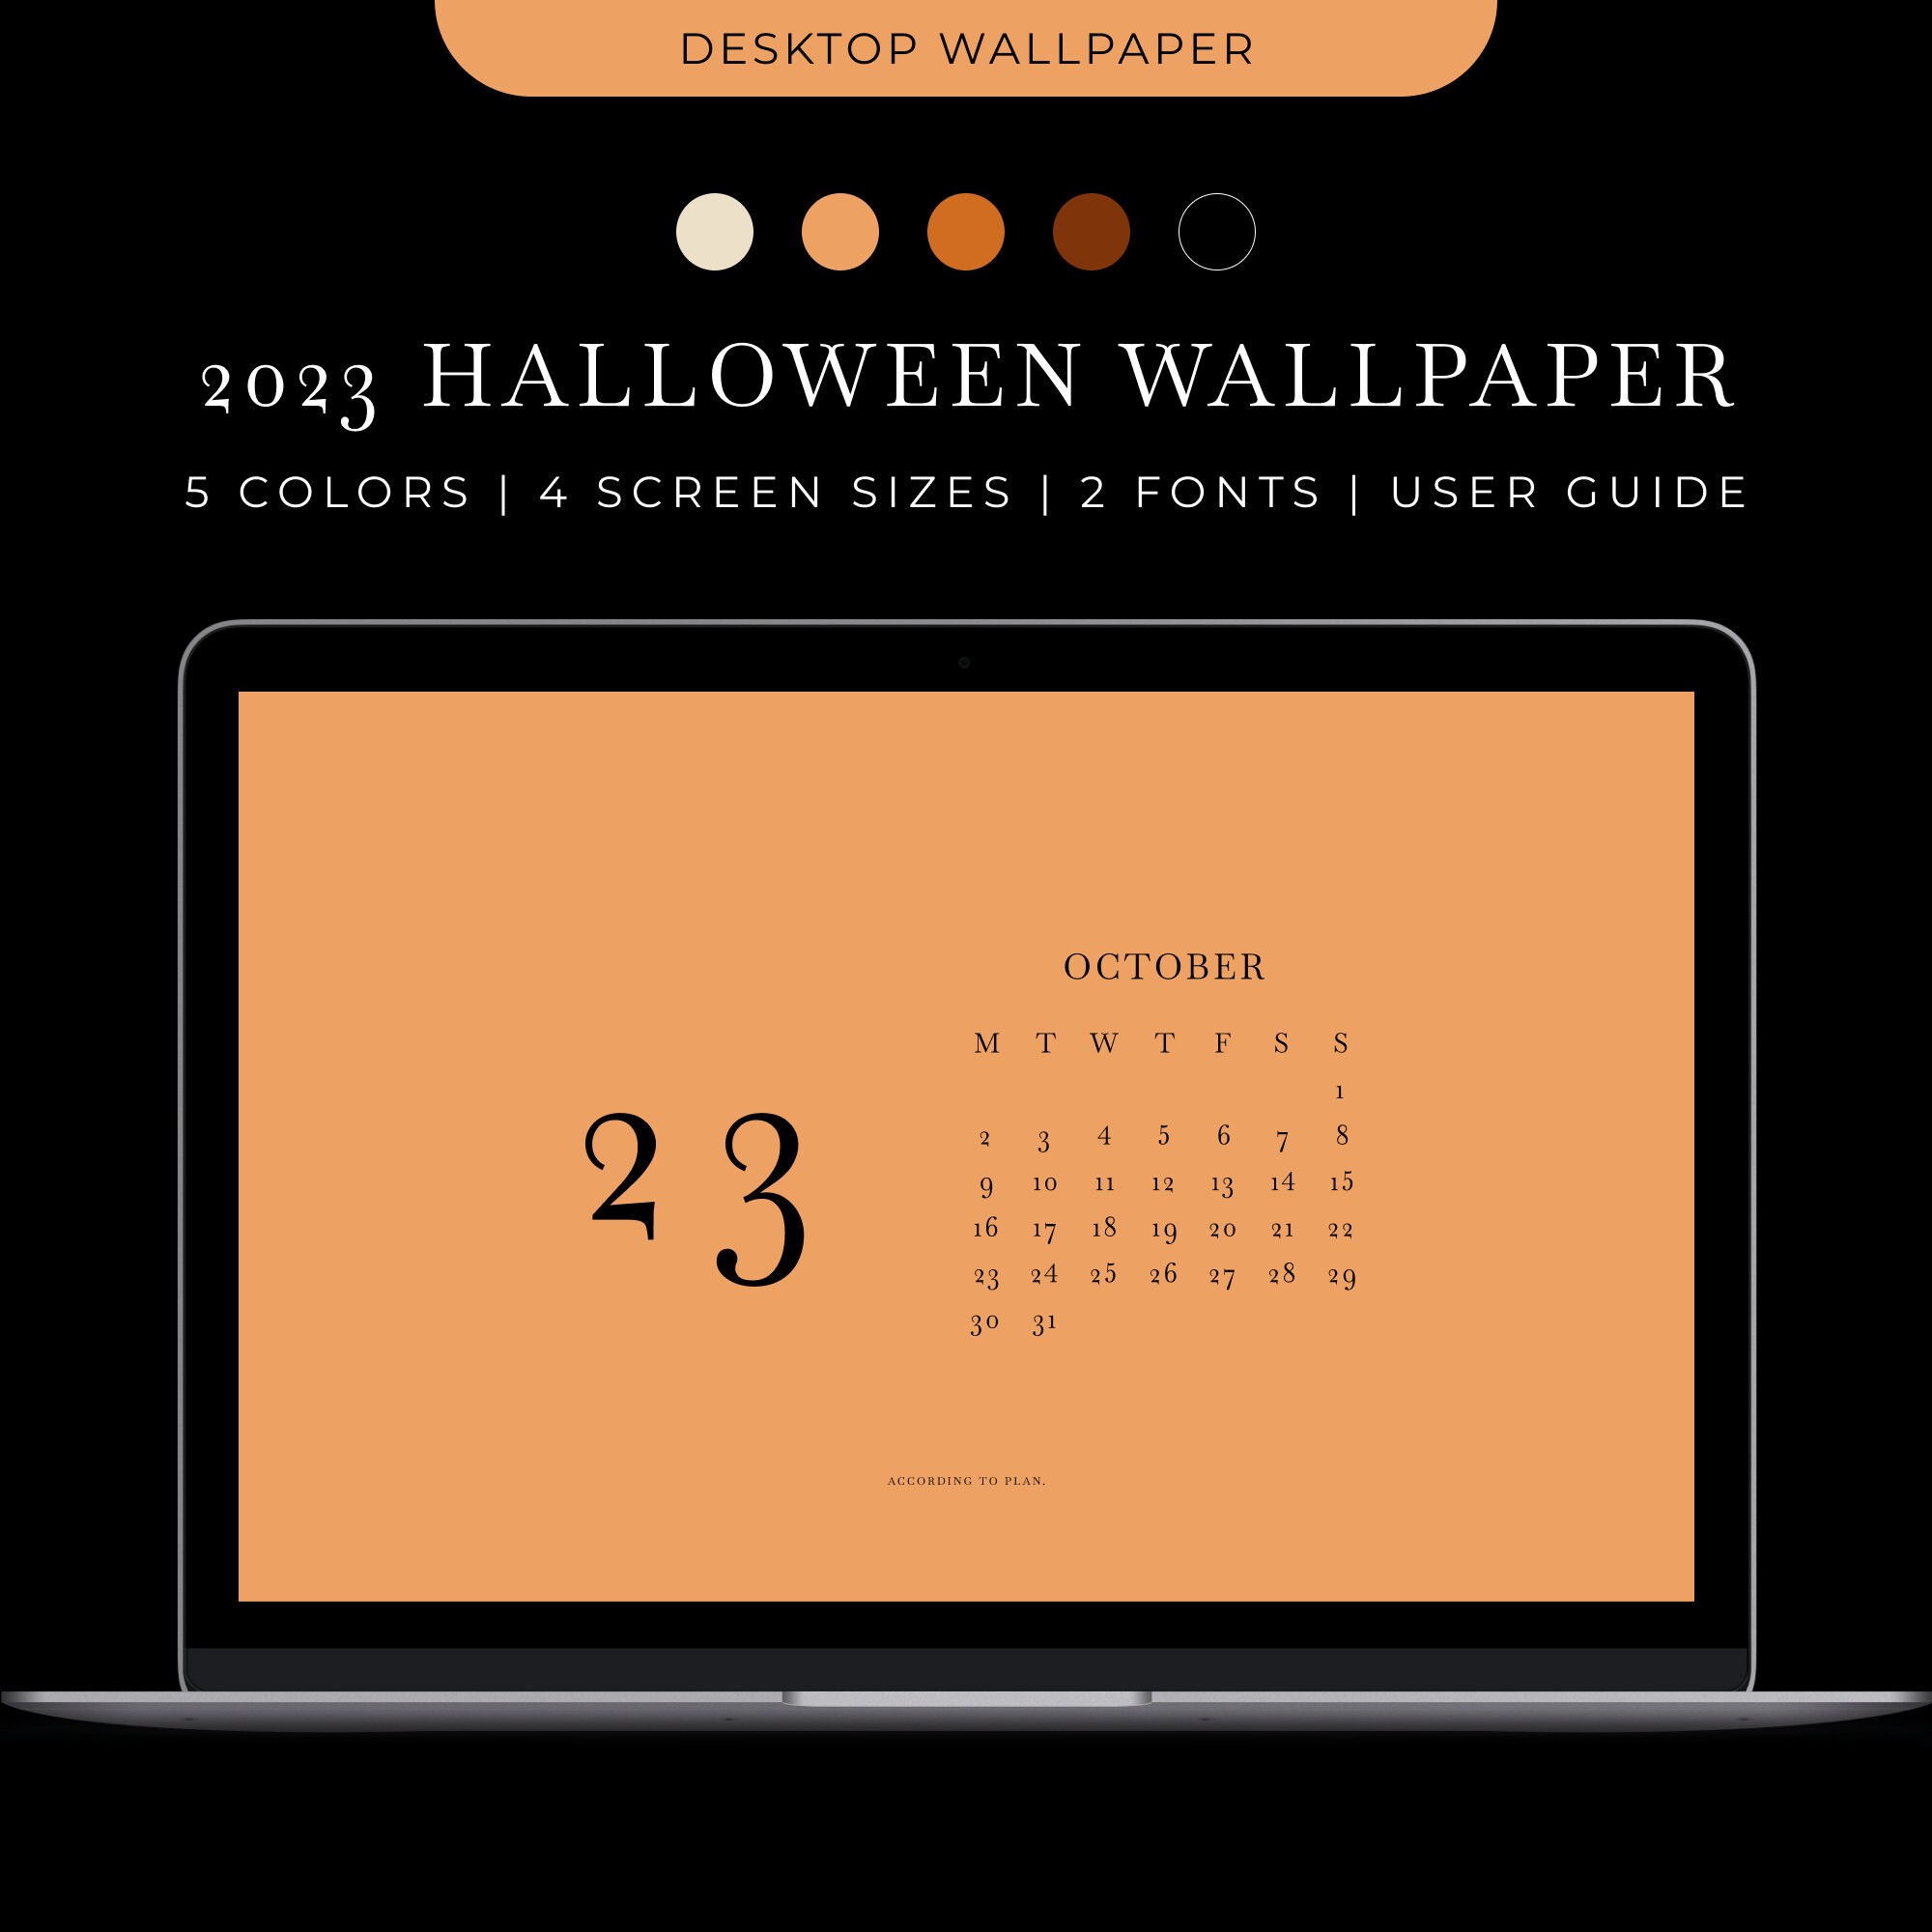 Fall Aesthetic iPad Wallpaper Bundle Hello Fall iPad 